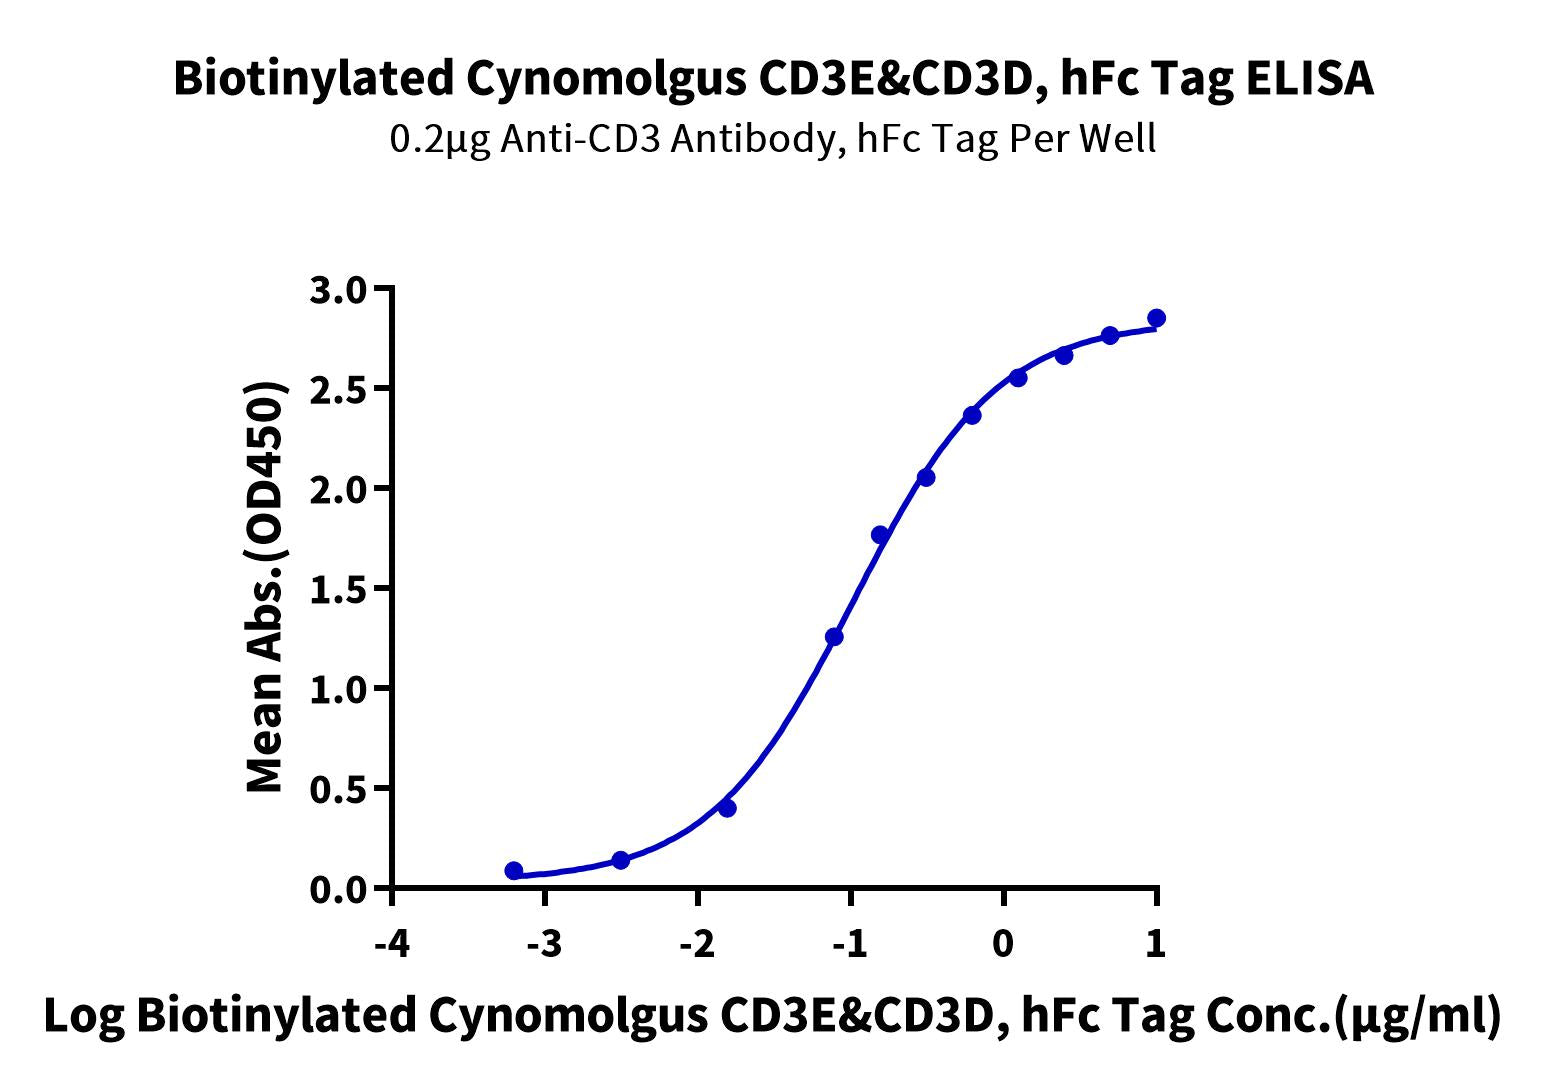 Biotinylated Cynomolgus CD3E&CD3D/CD3 epsilon&CD3 delta Protein (Primary Amine Labeling) (CD3-CM201B)